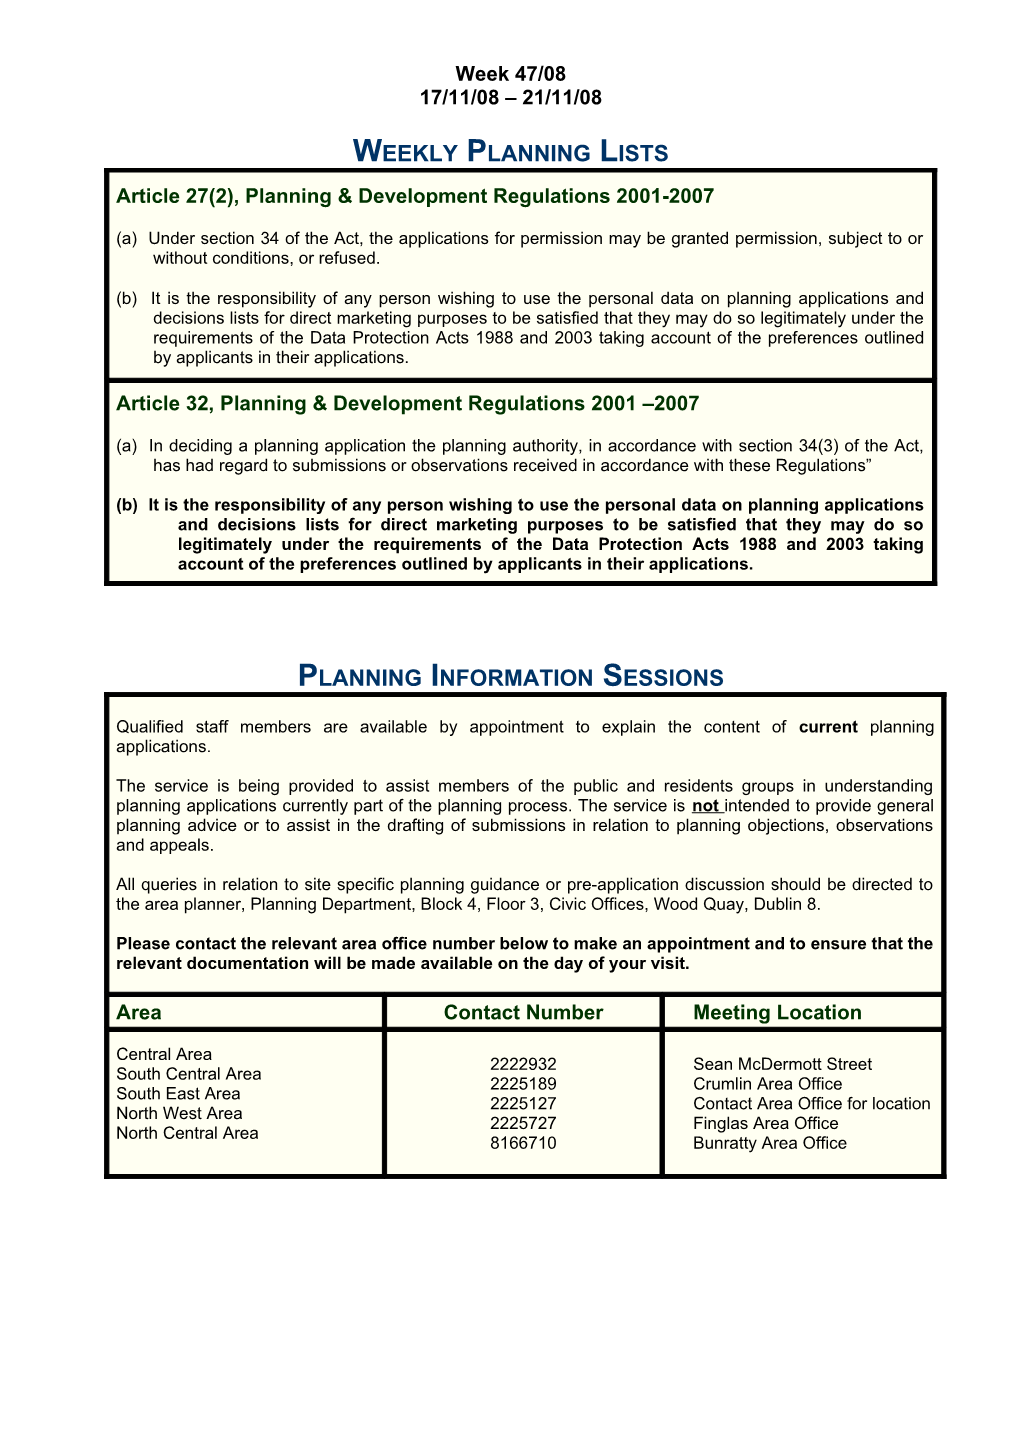 Article 27(2), Planning & Development Regulations 2001-2007 s16